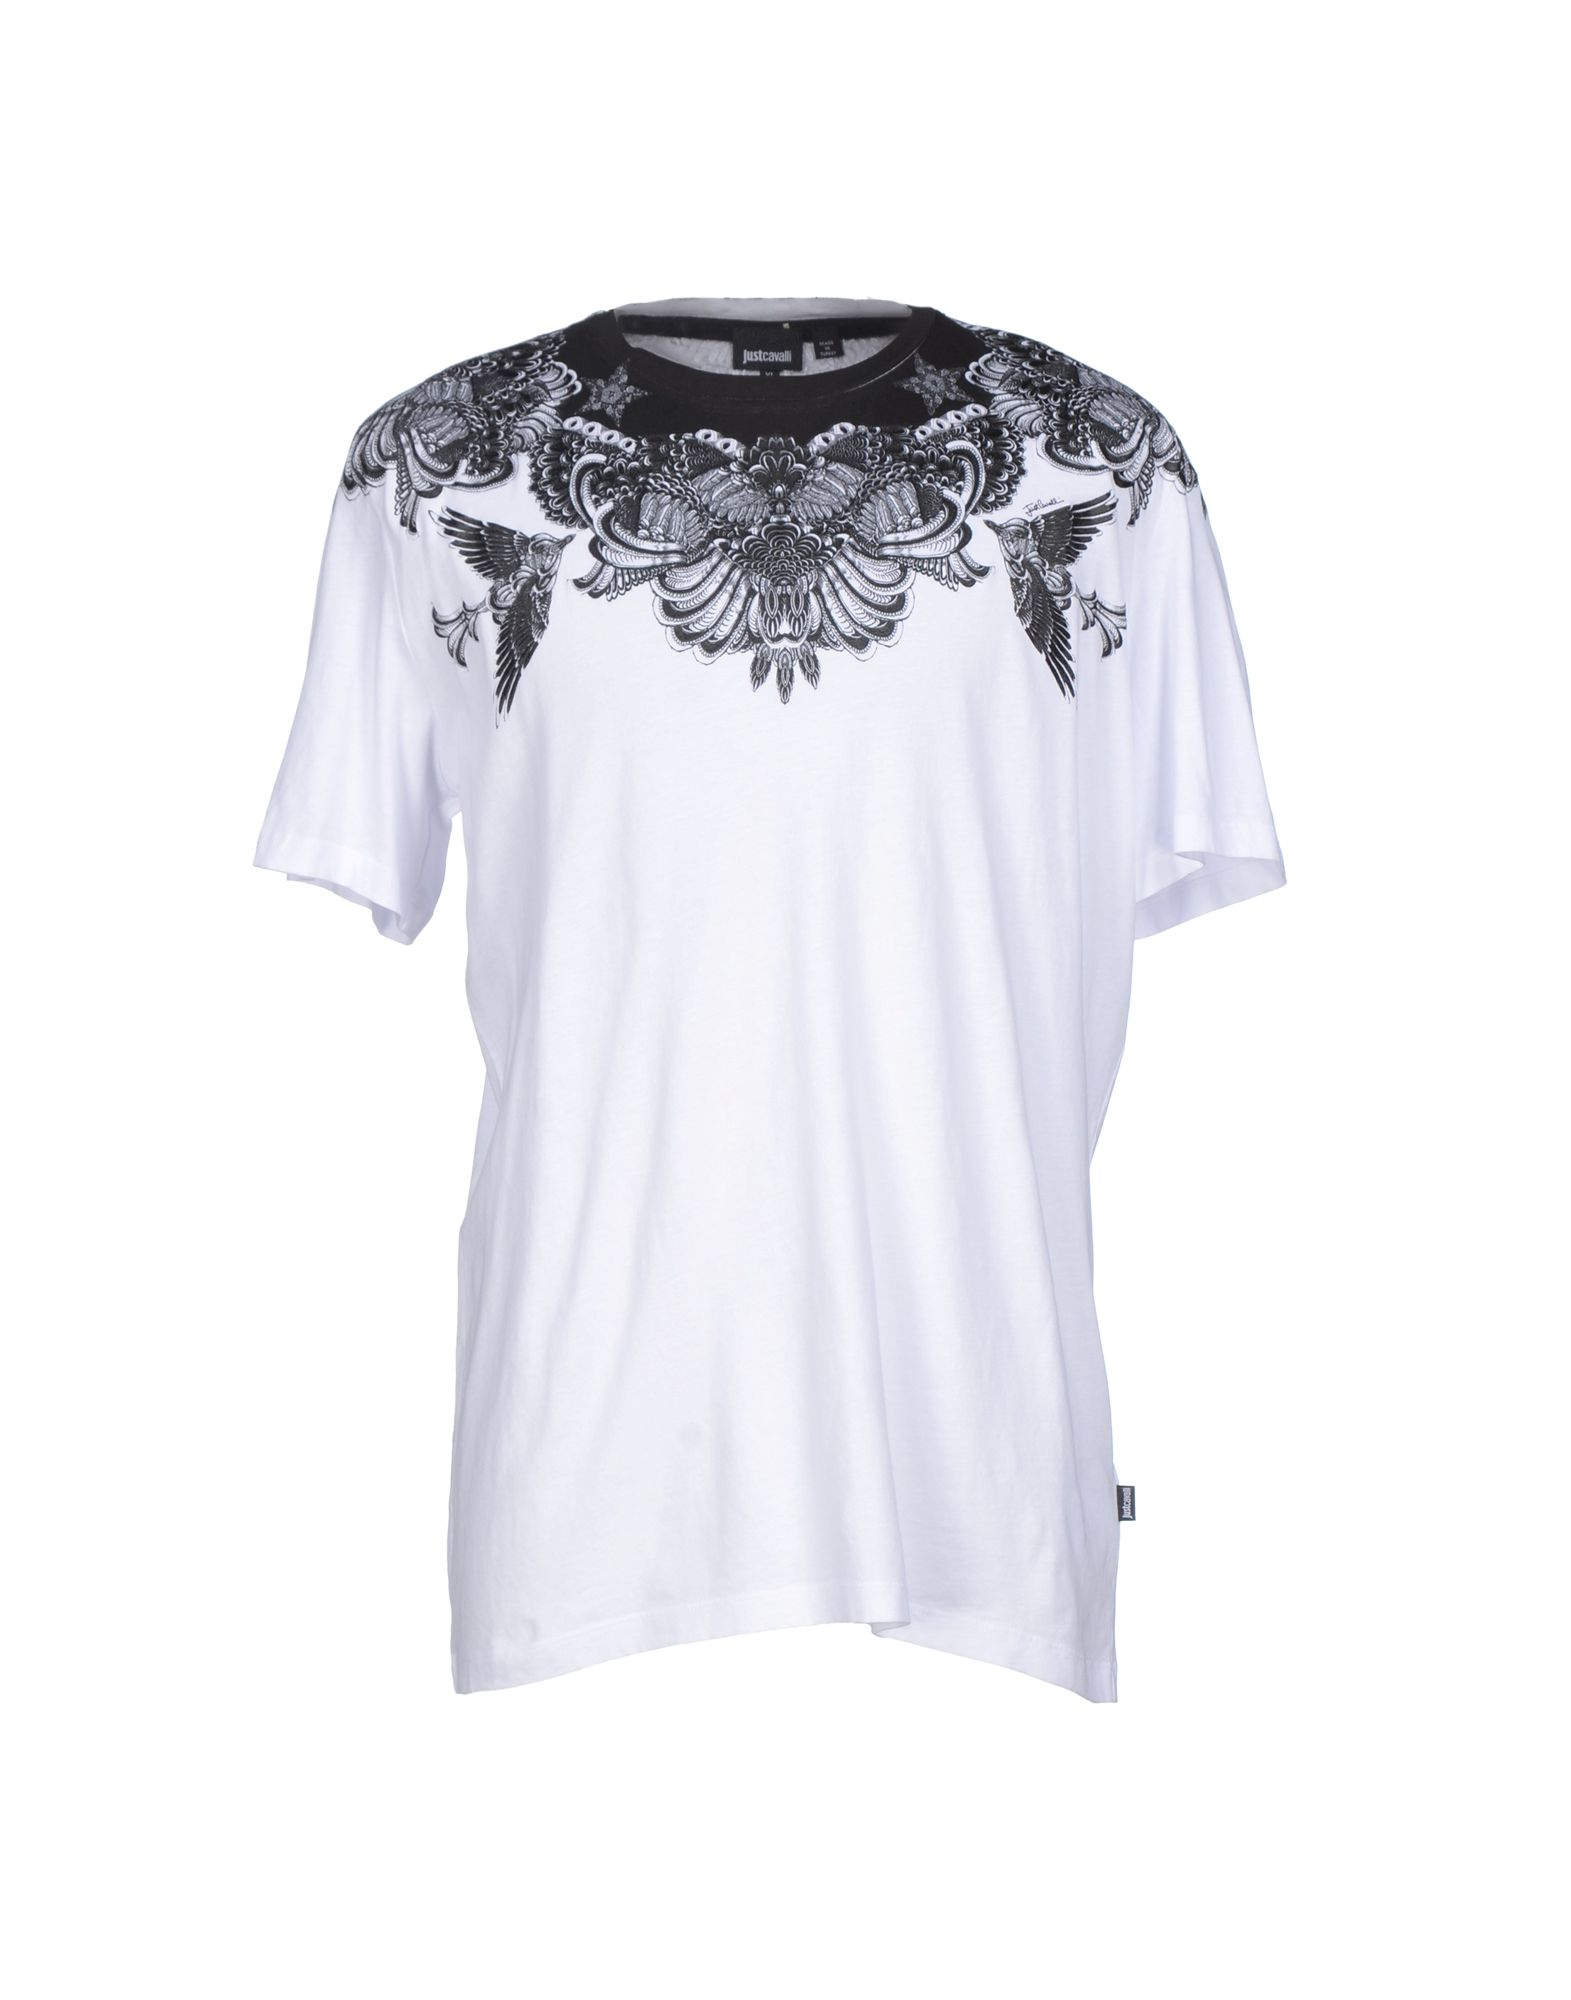 Just Cavalli T-shirt in White for Men - Lyst